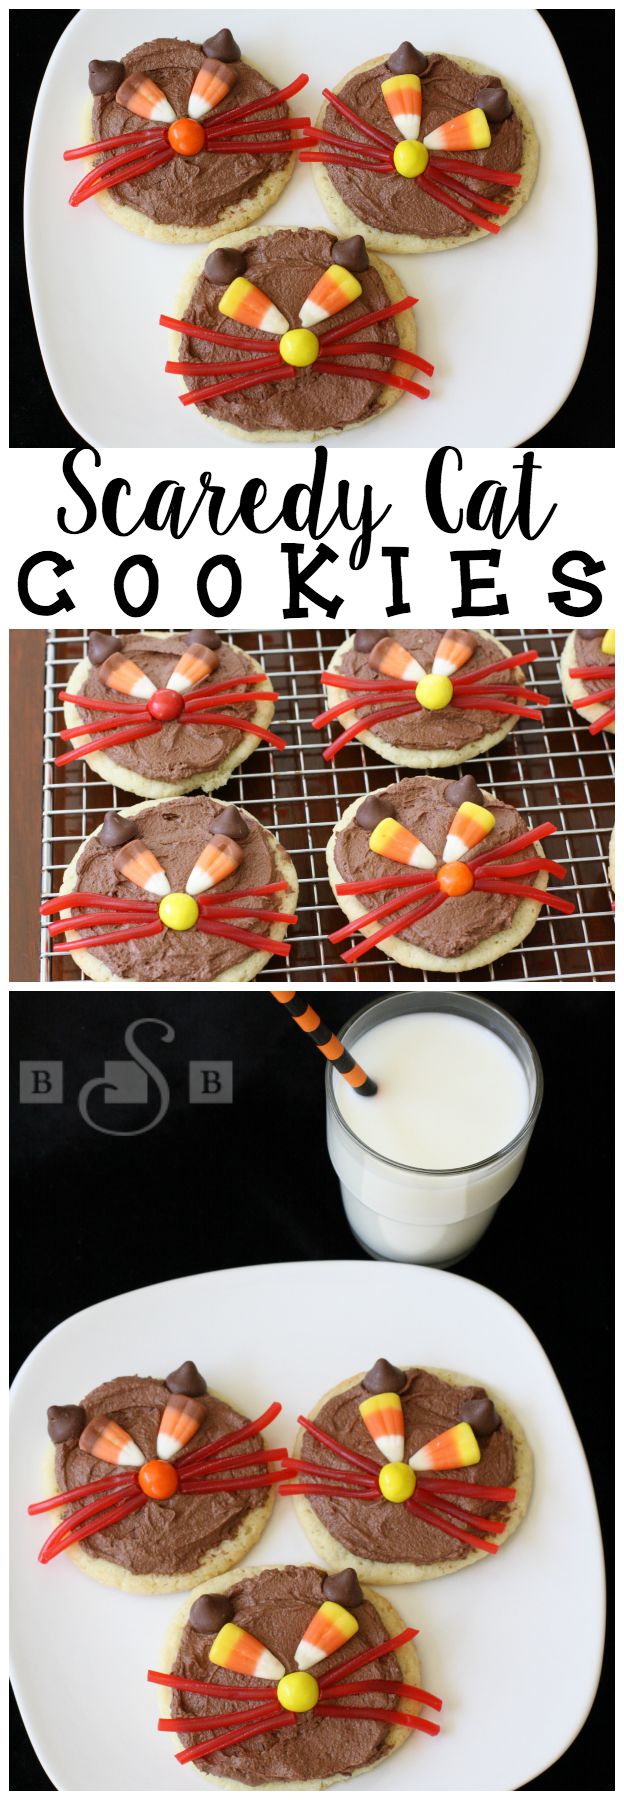 scaredy-cat-cookies-krusteaz-bsb_-pin_